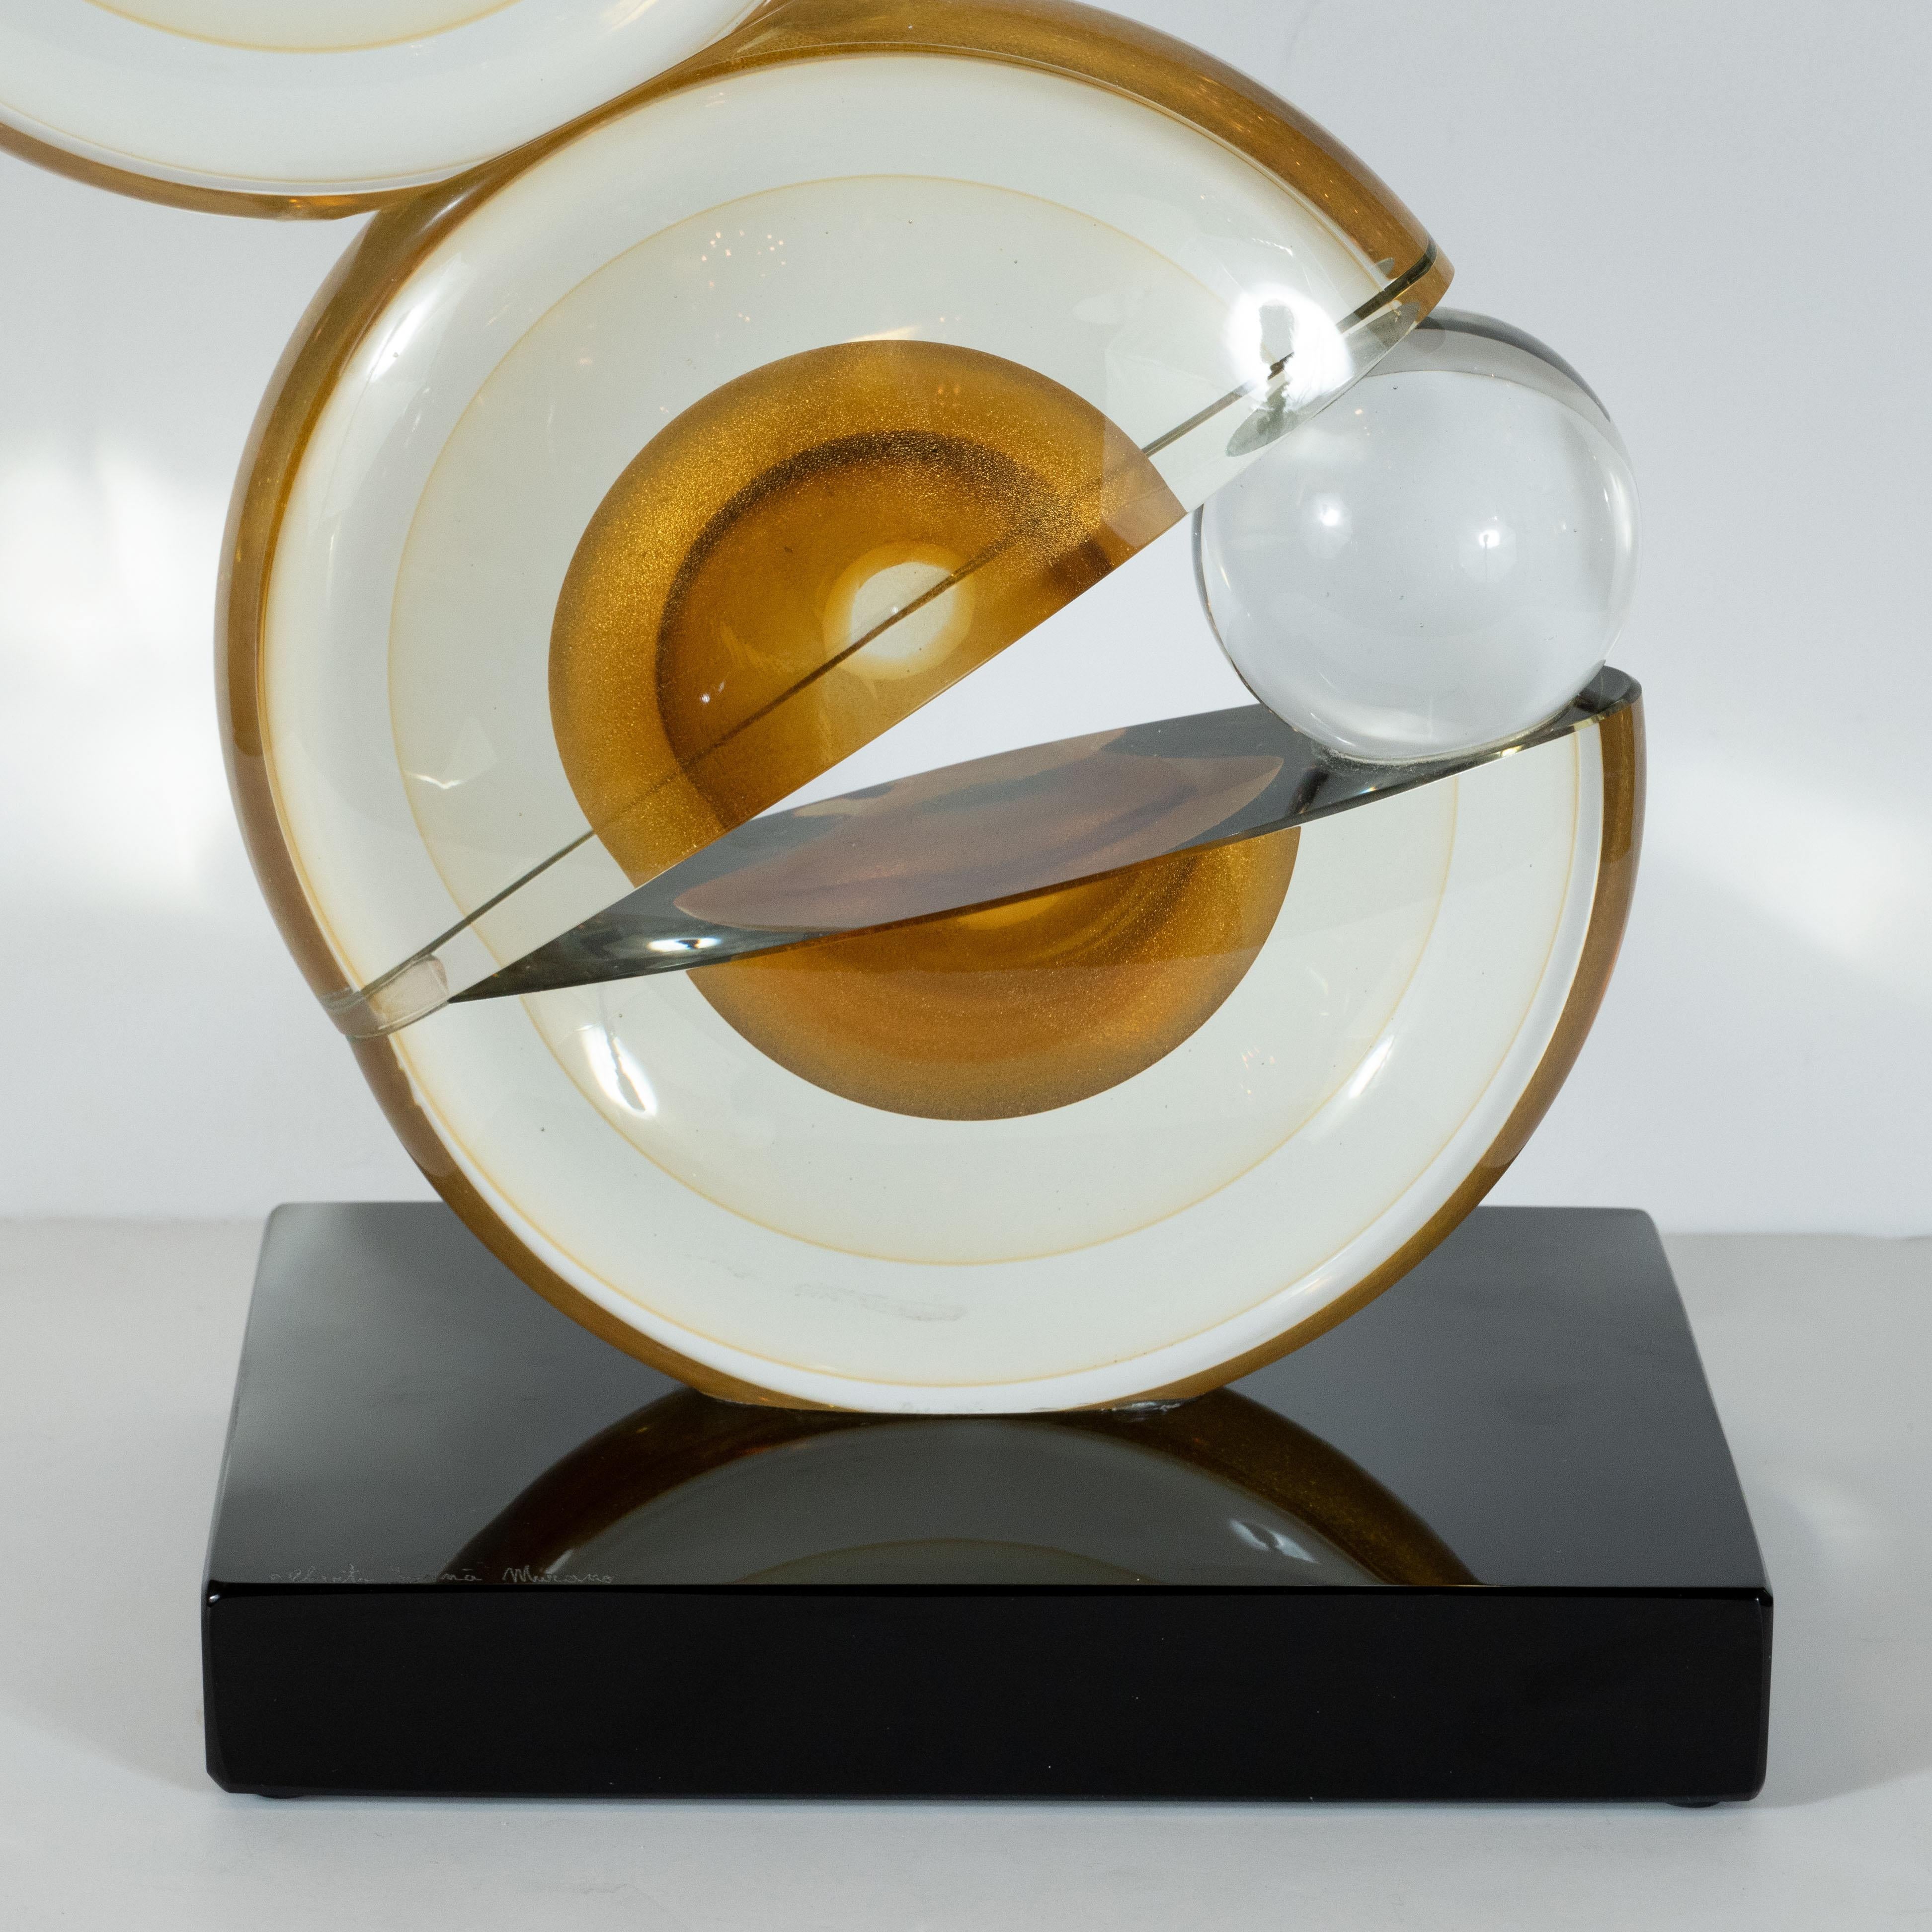 Italian Modernist Handblown Murano Glass Geometric Sculpture with 24-Karat Gold Flecks